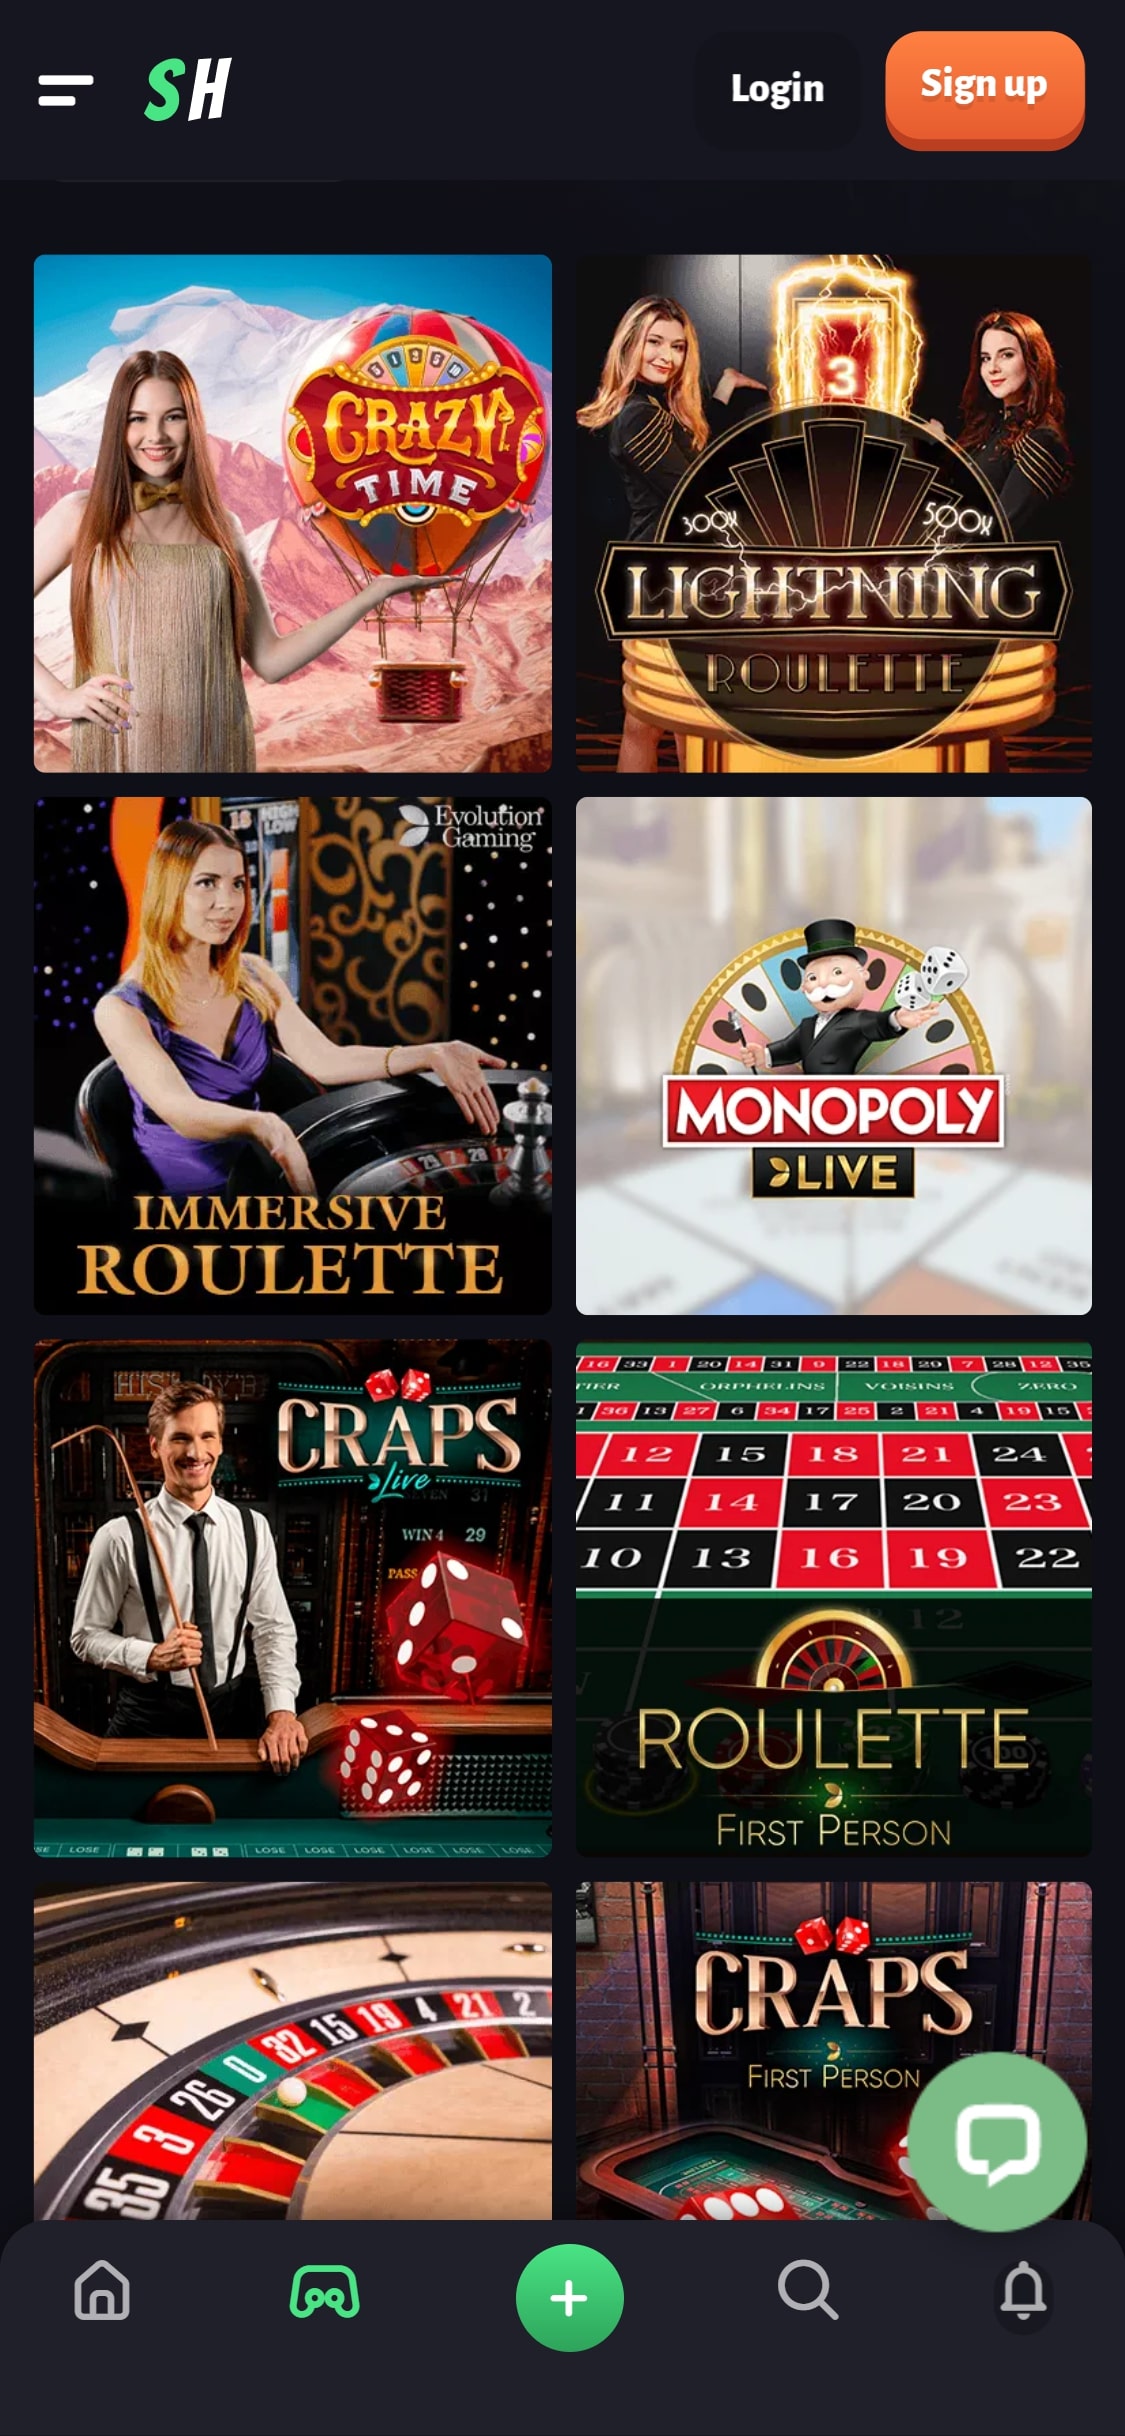 SlotHunter Casino Mobile Live Dealer Games Review